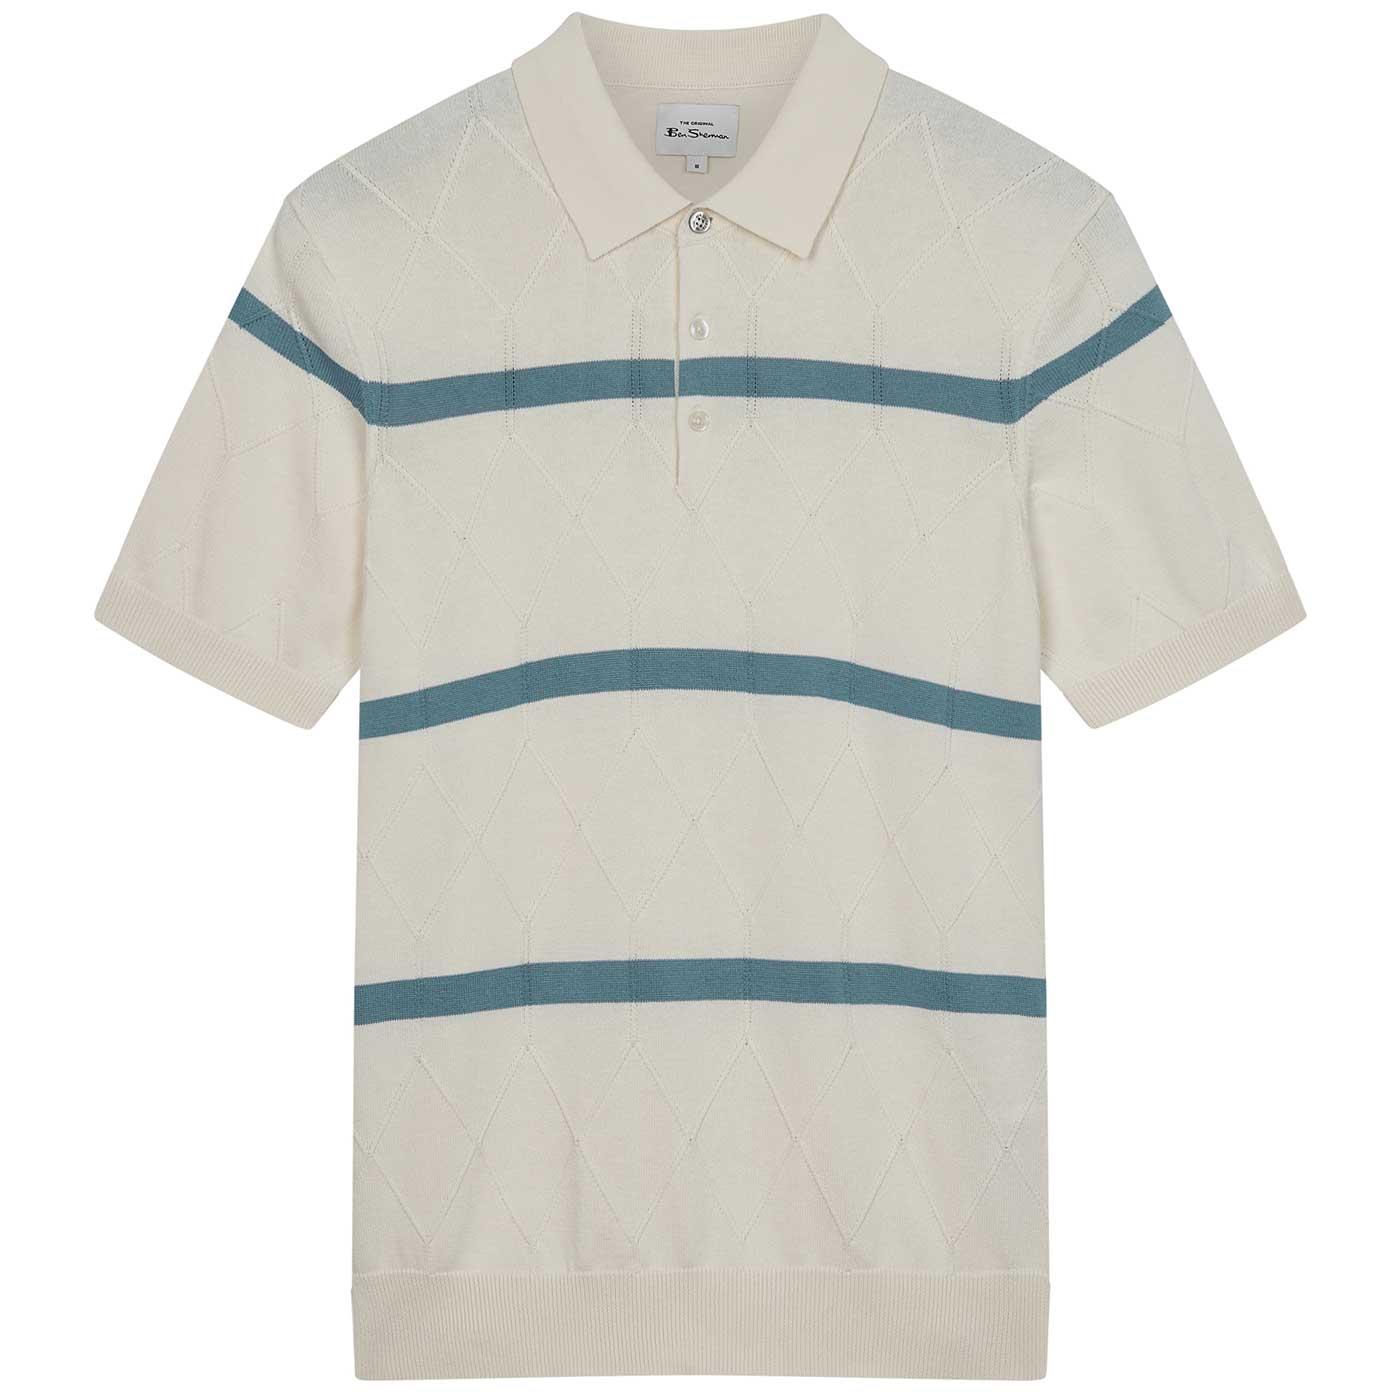 Ben Sherman Textured Argyle Stripe Mod Polo Shirt